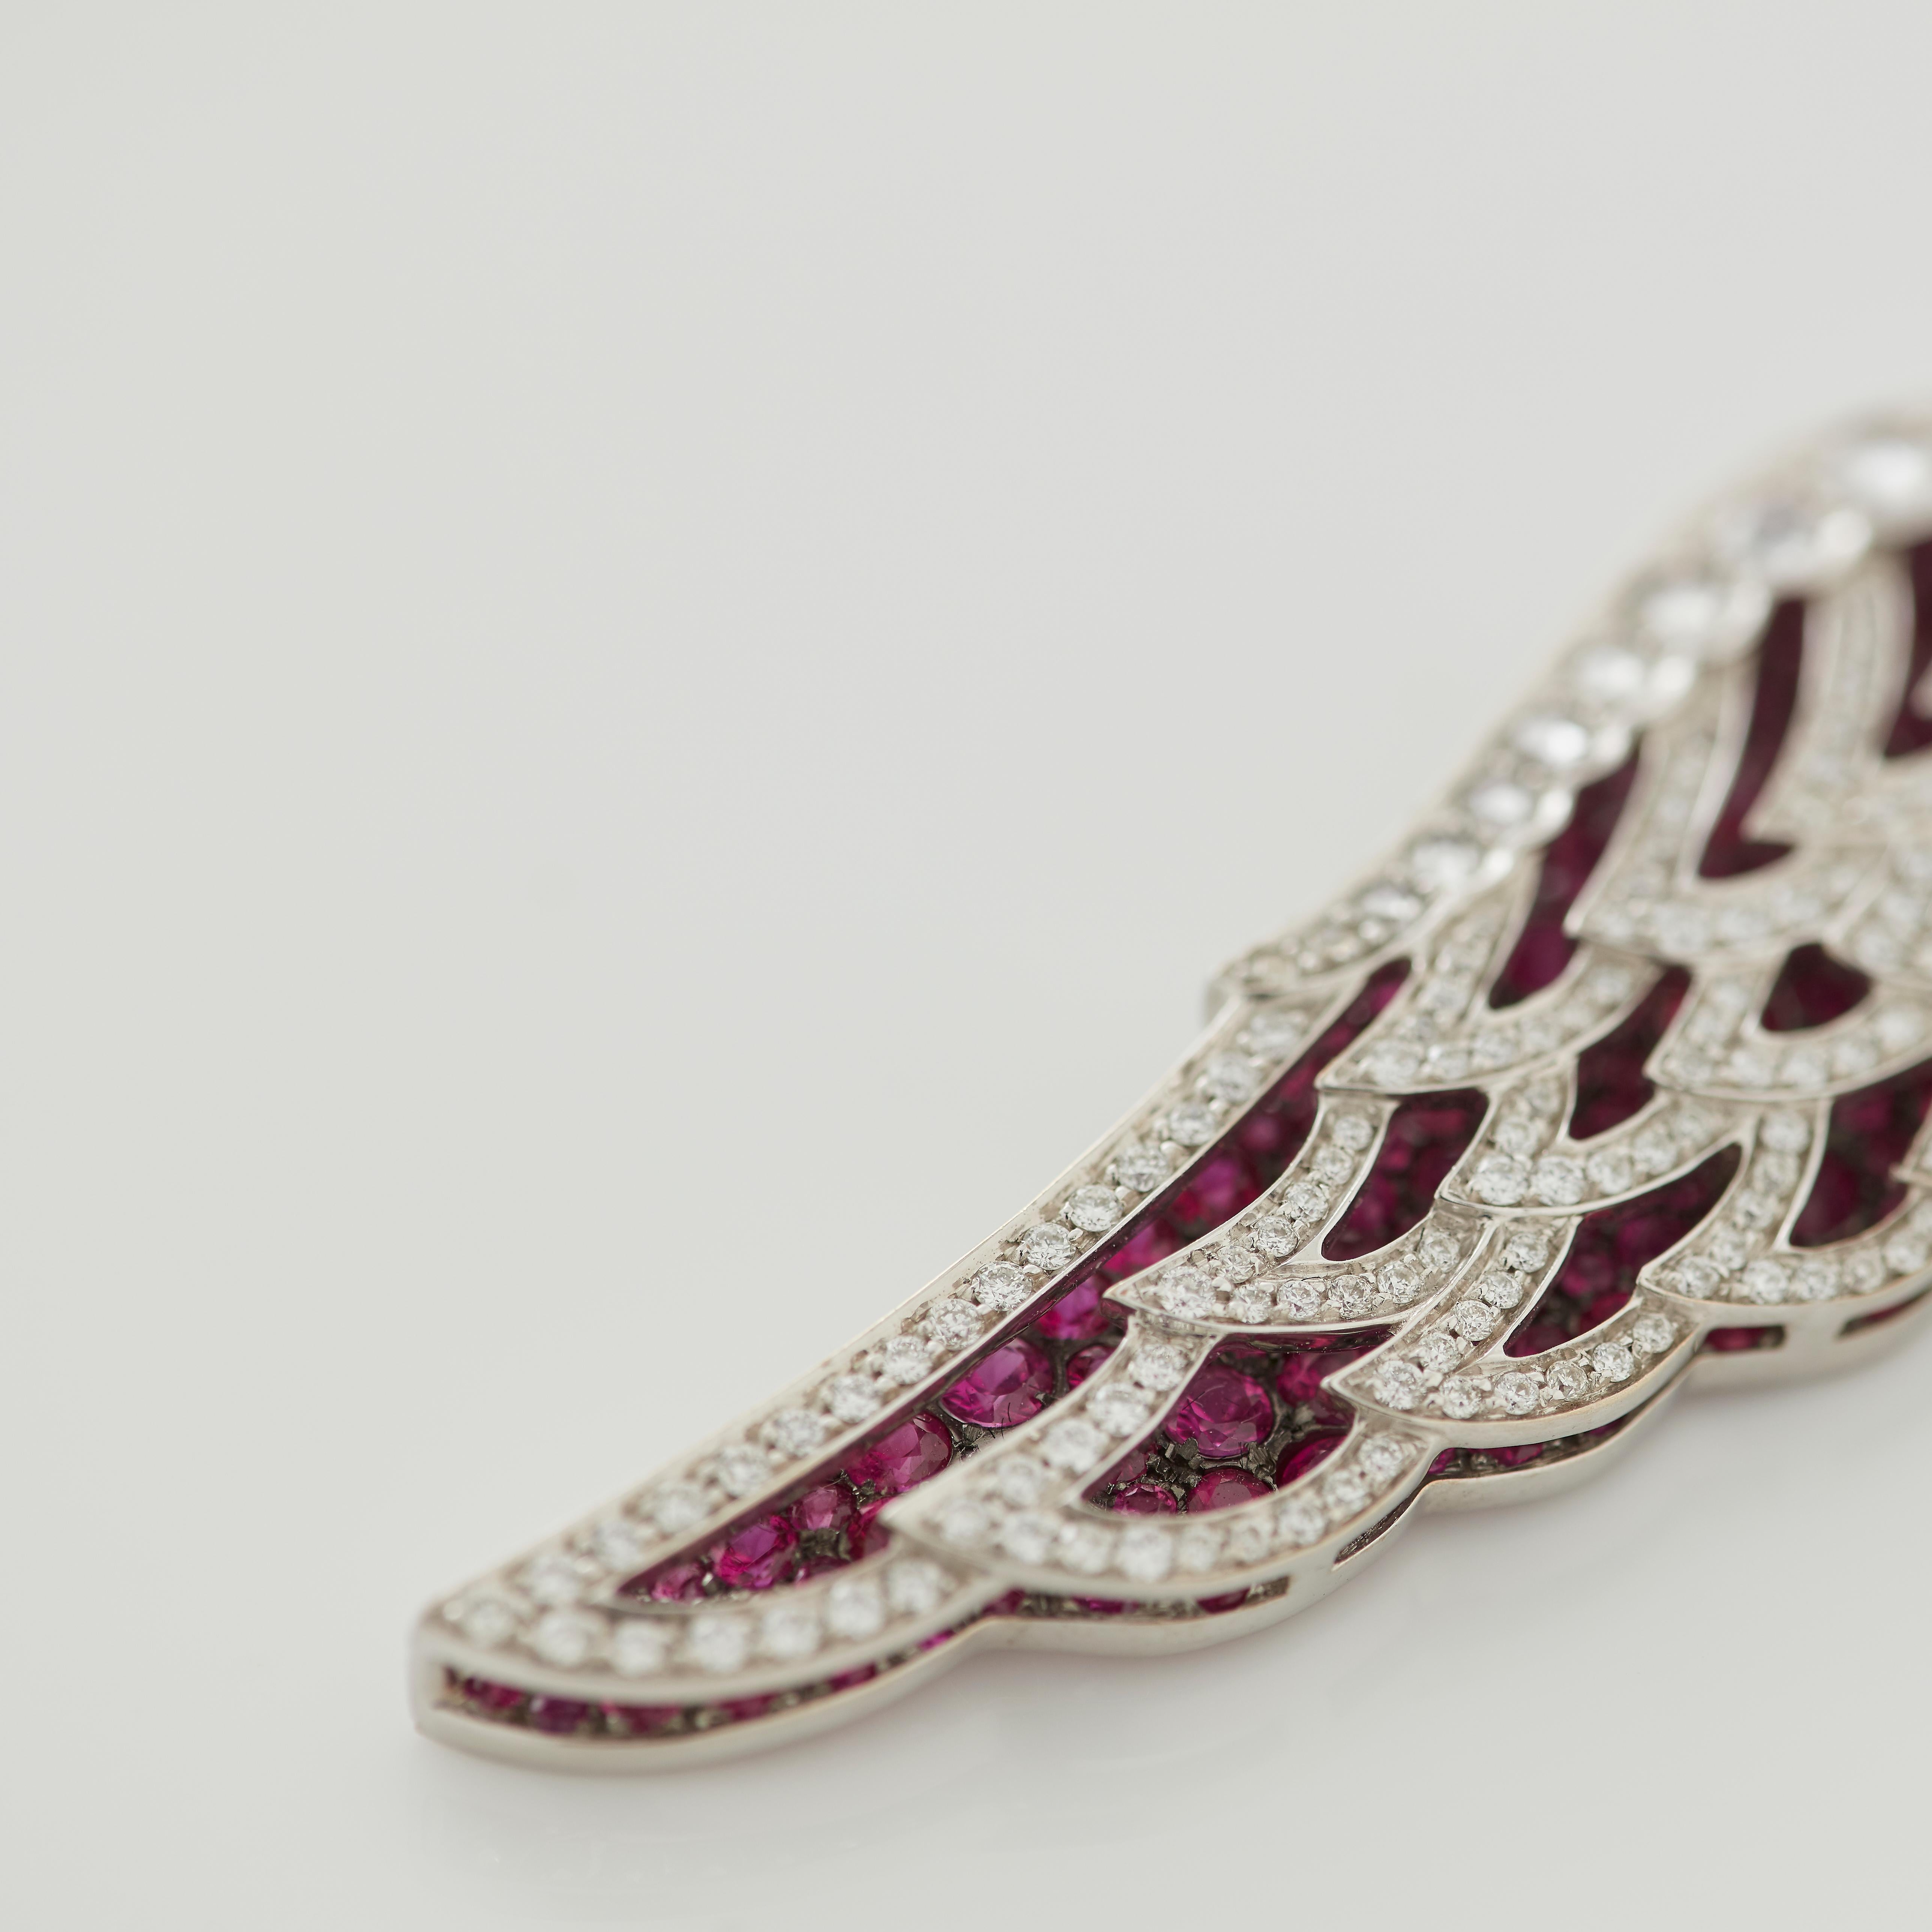 Garrard 'Wings Lace' 18 Karat White Gold Rose Cut Diamond and Ruby Drop Earrings For Sale 2